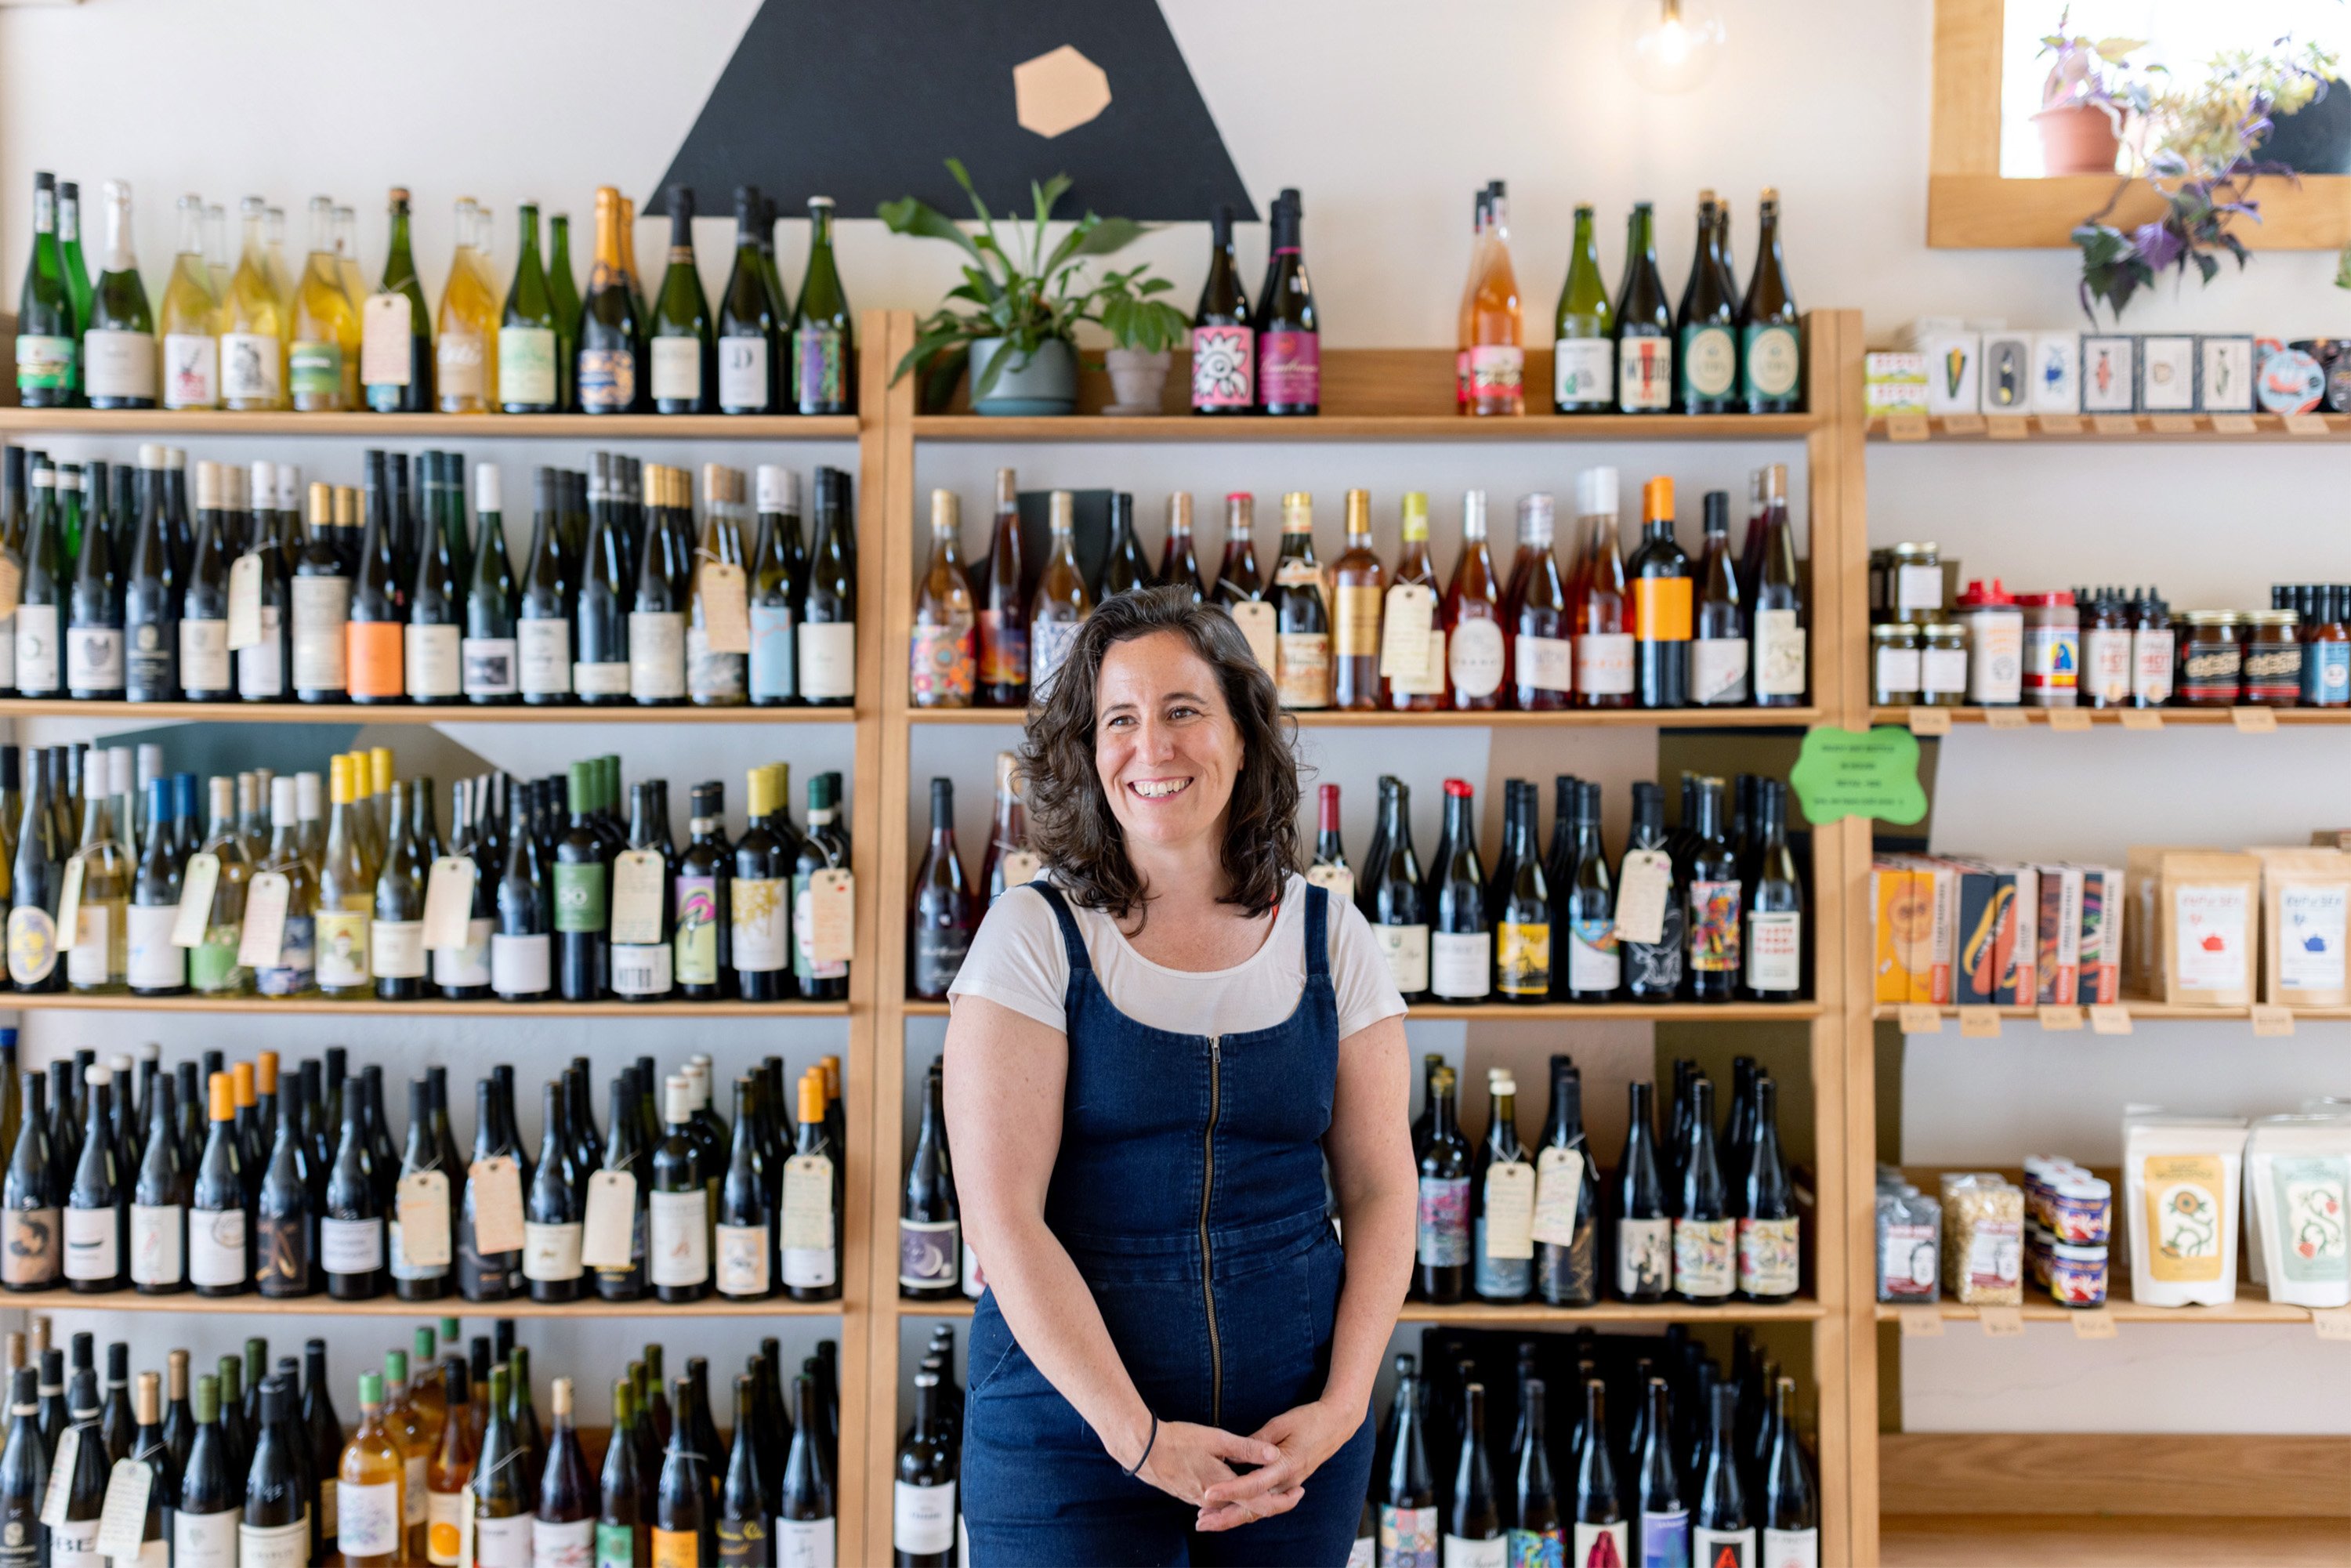 Celebrating Portland’s wine scene, where women rule